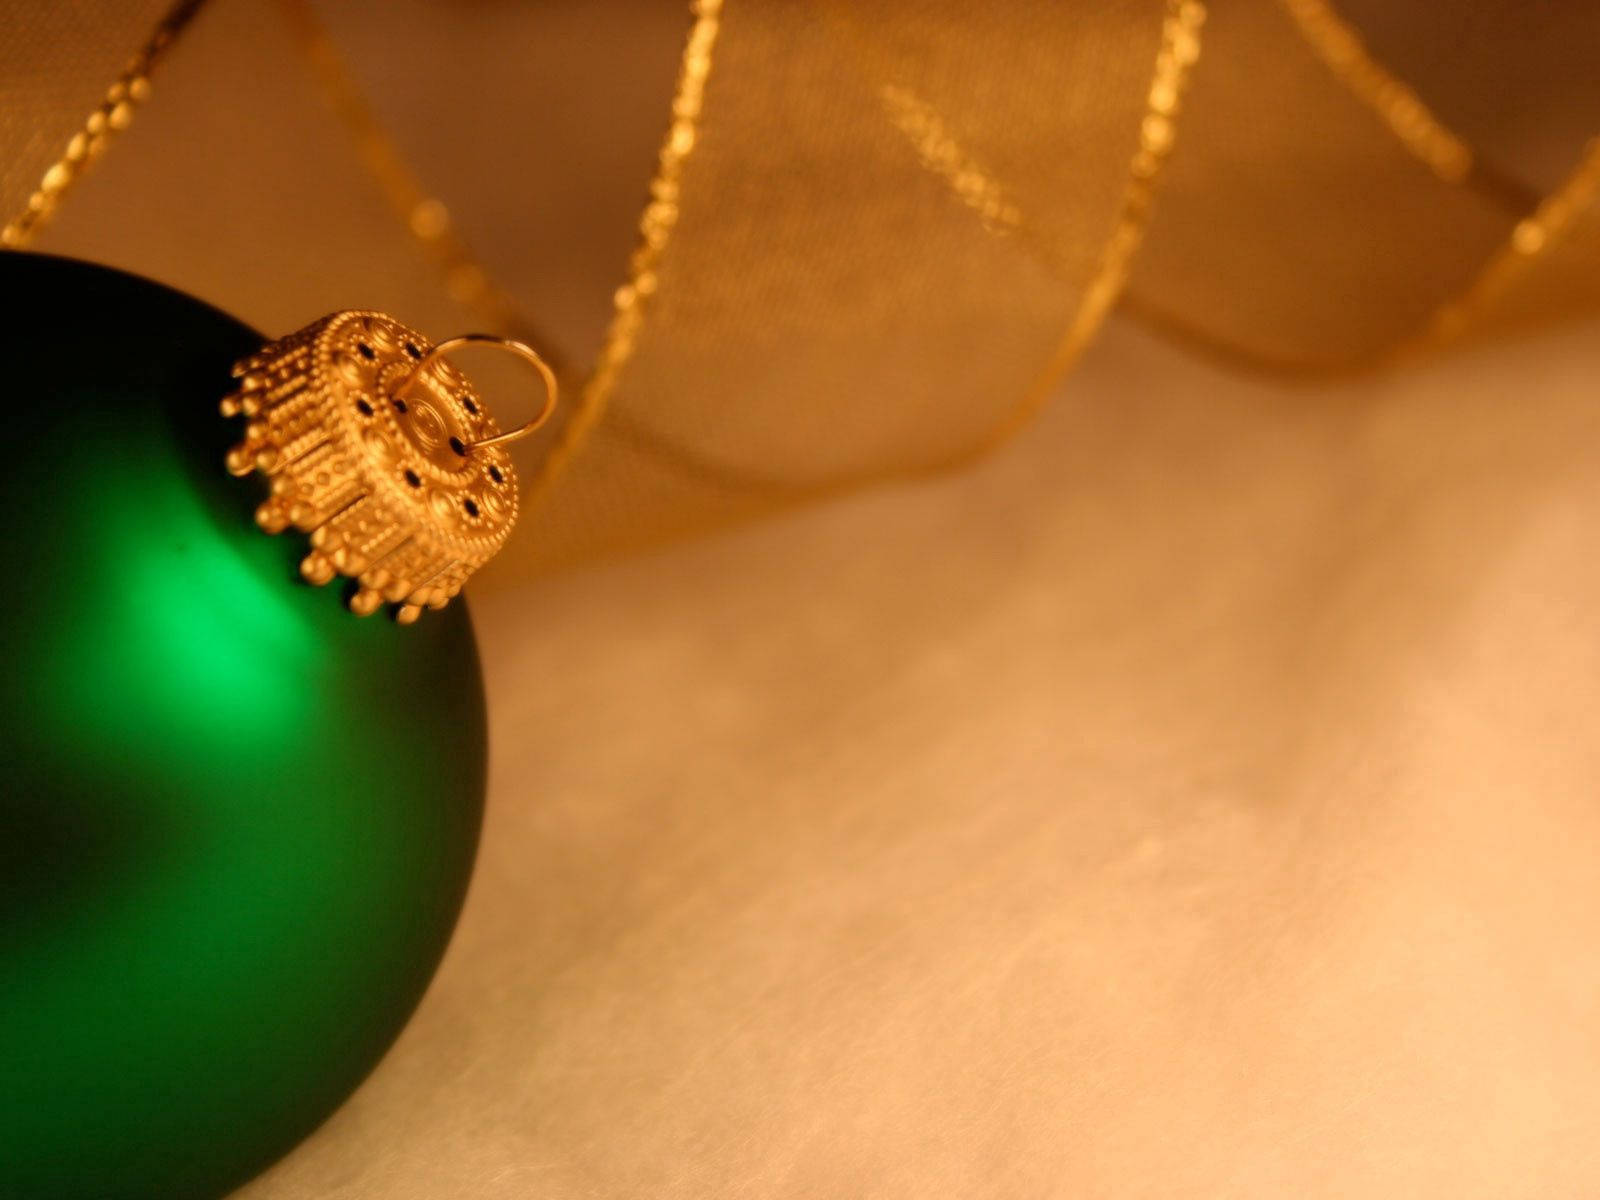 Close-up New Year's Green Ball Ornament Wallpaper